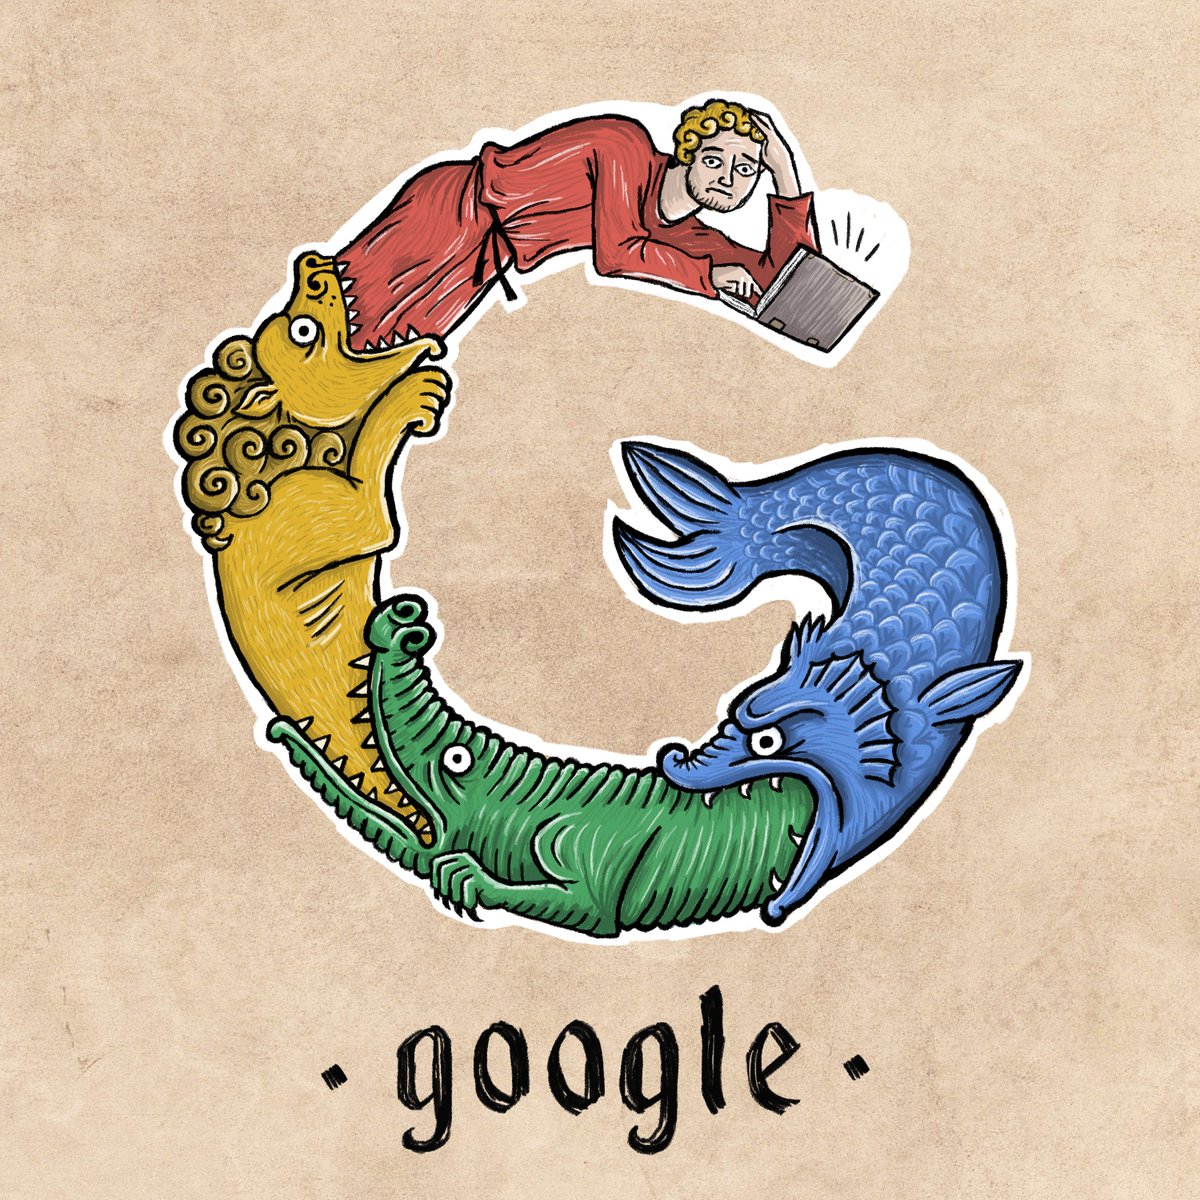 Google
Medieval branding